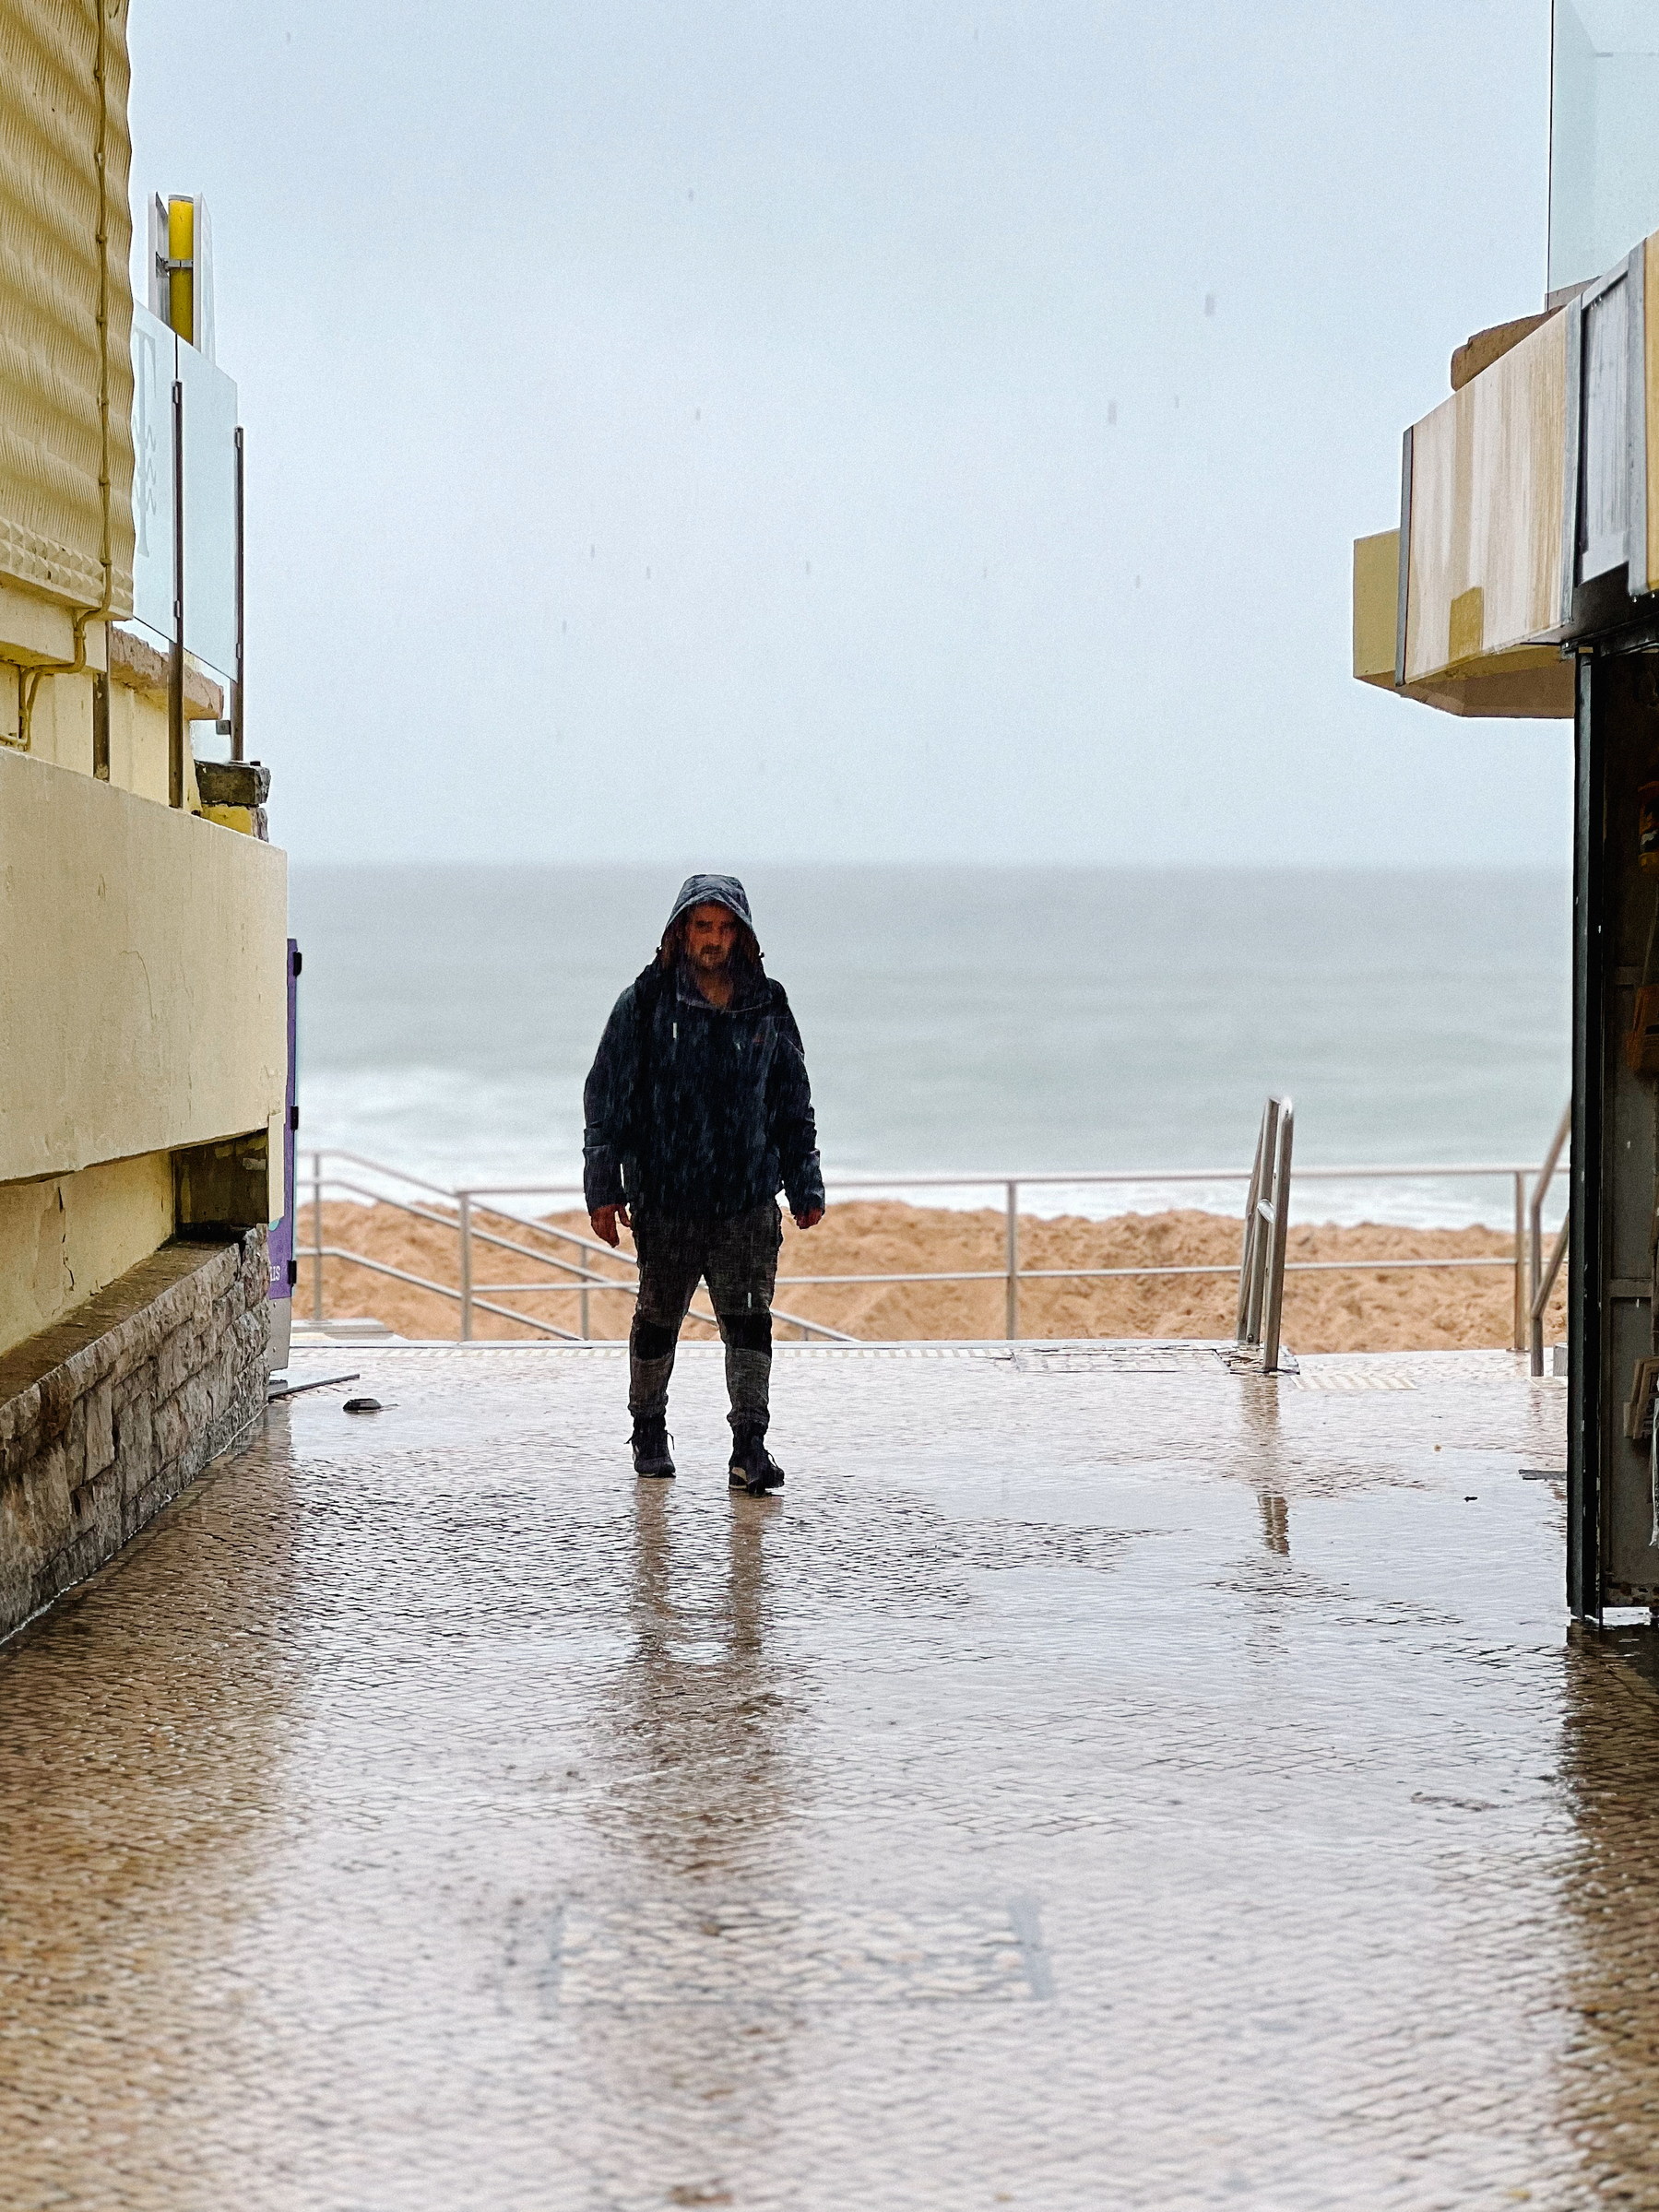 A man walks towards us, in rain gear. The ocean as a backdrop. 